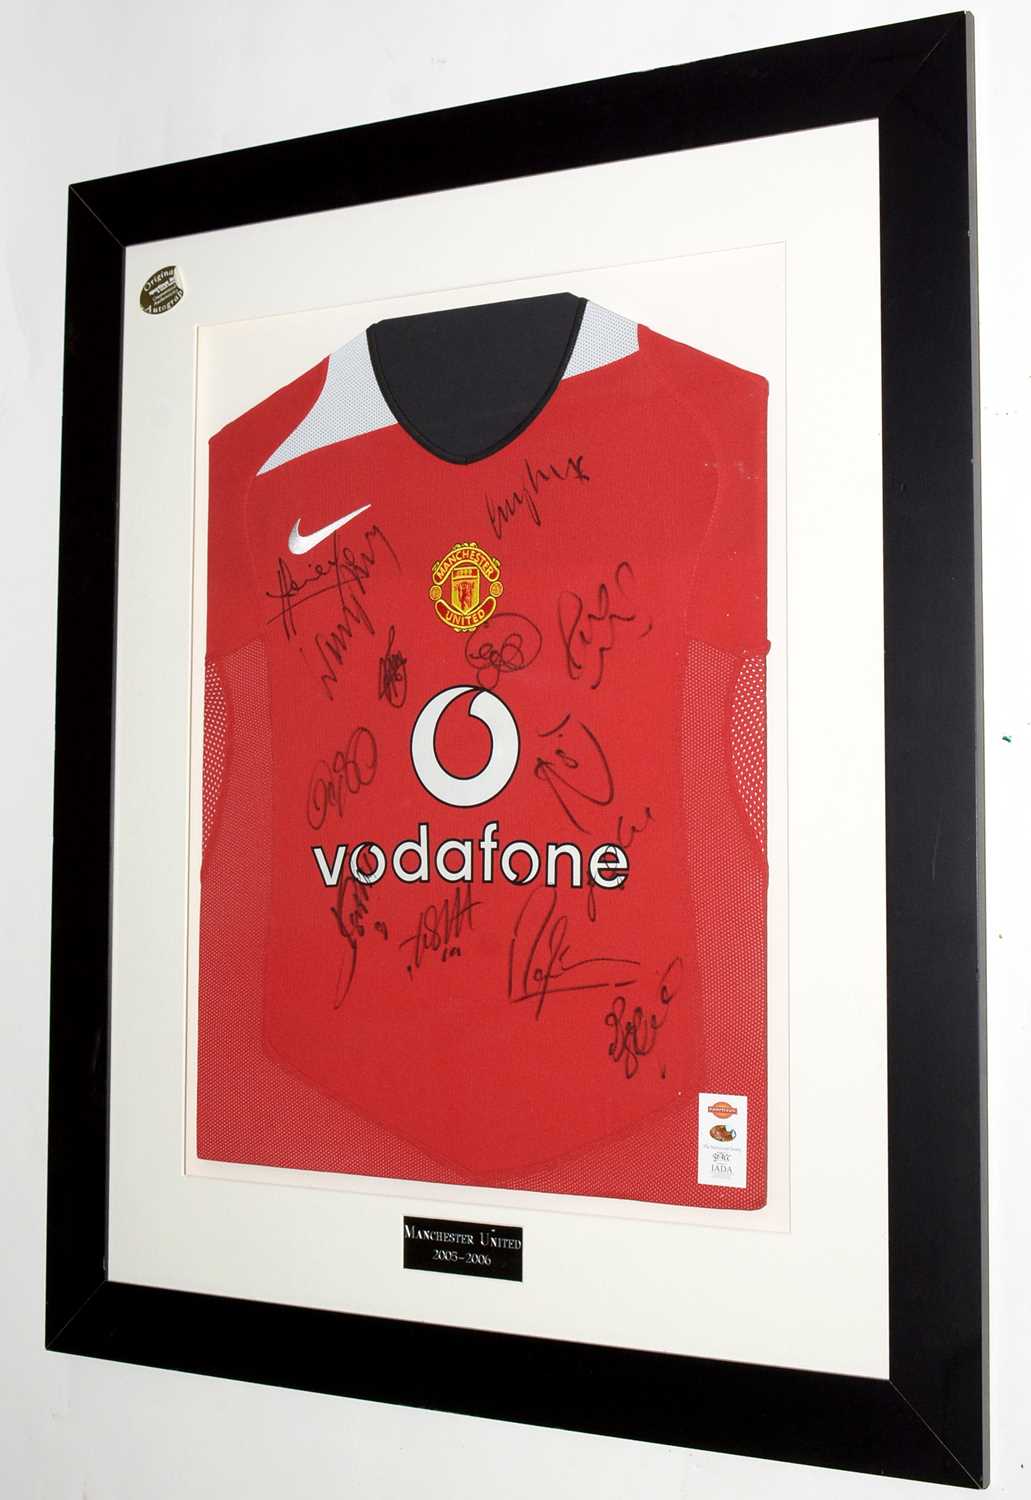 Lot 1174 - Manchester United: a 2005/06 season signed replica shirt